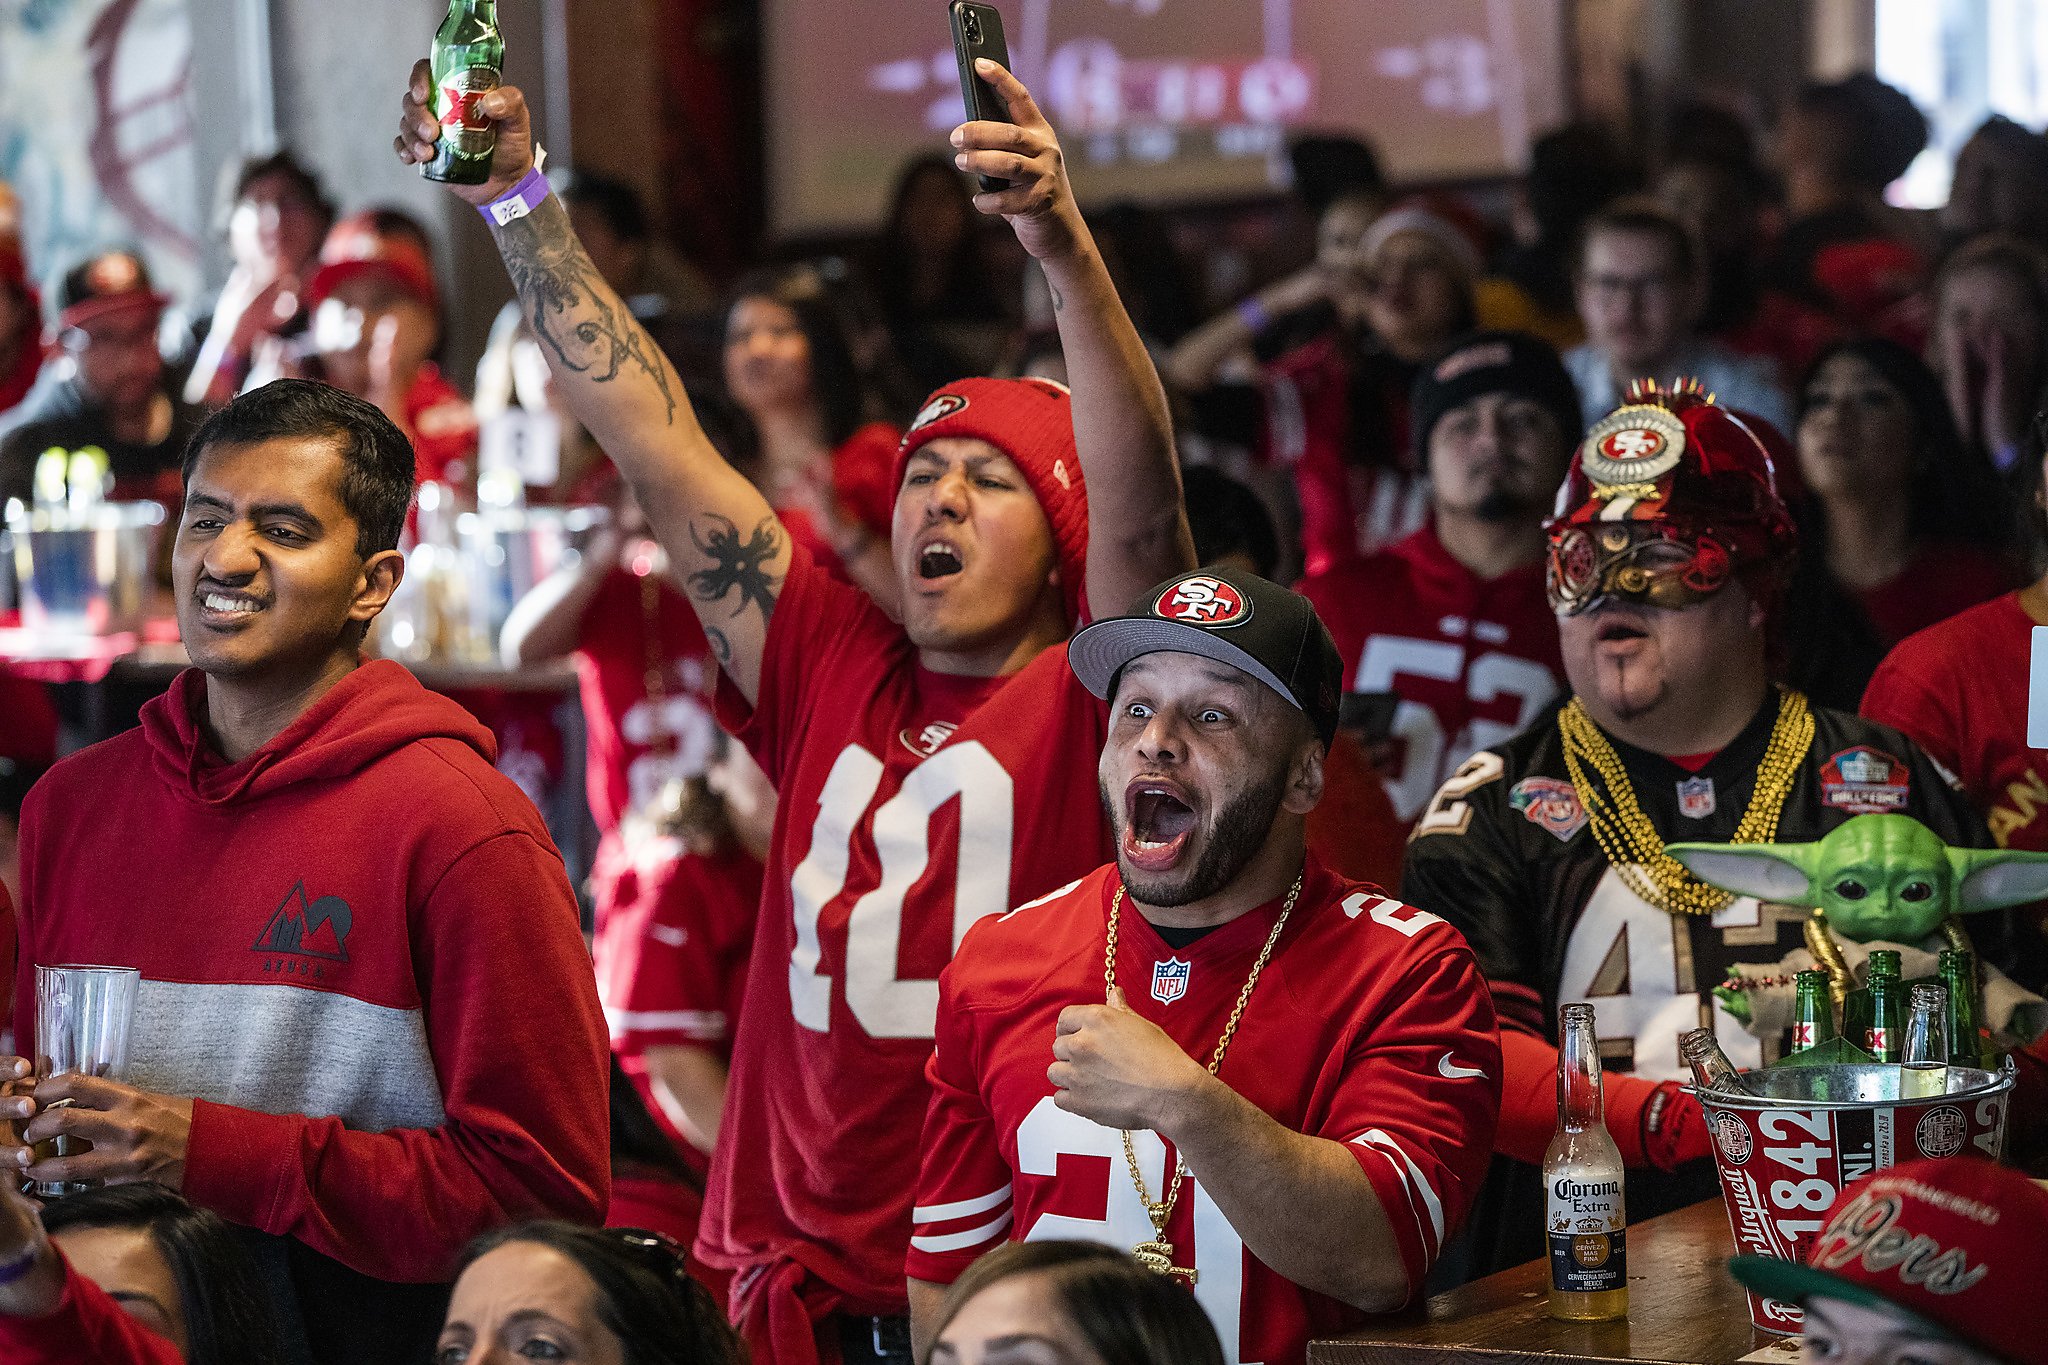 Dempsey sandsynligt Michelangelo 49ers fan meetup in LA pokes fun at Rams with giveaway